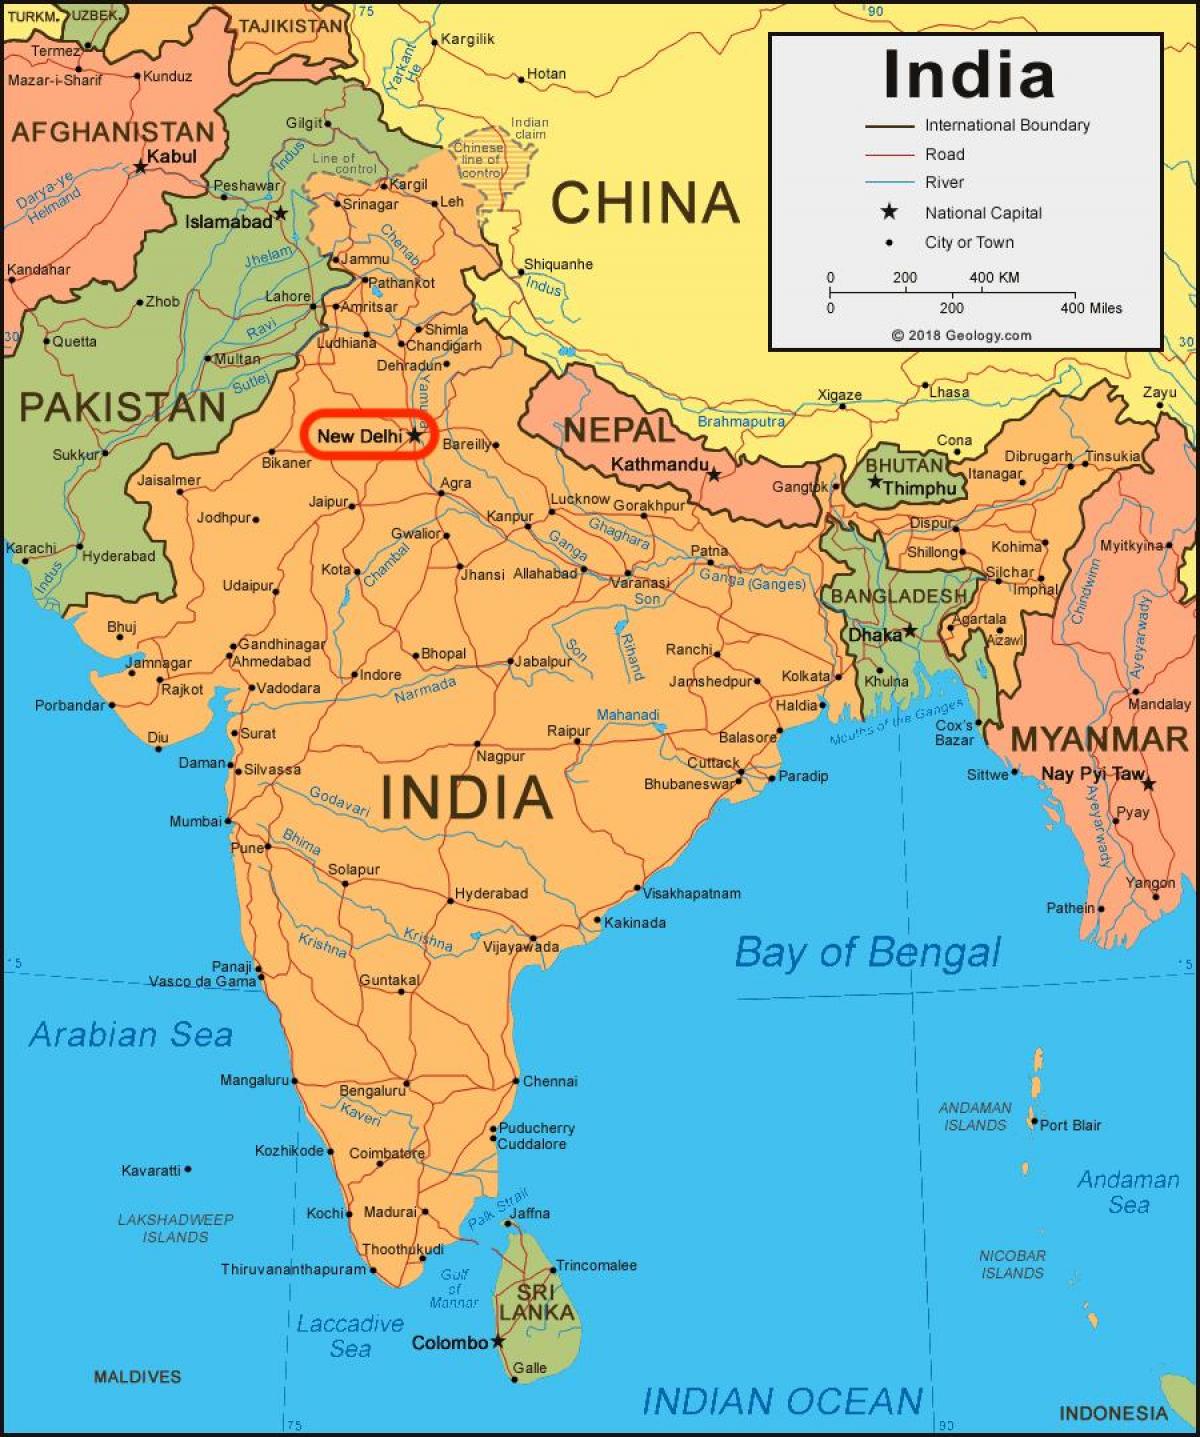 Ville de New Delhi sur la carte de India